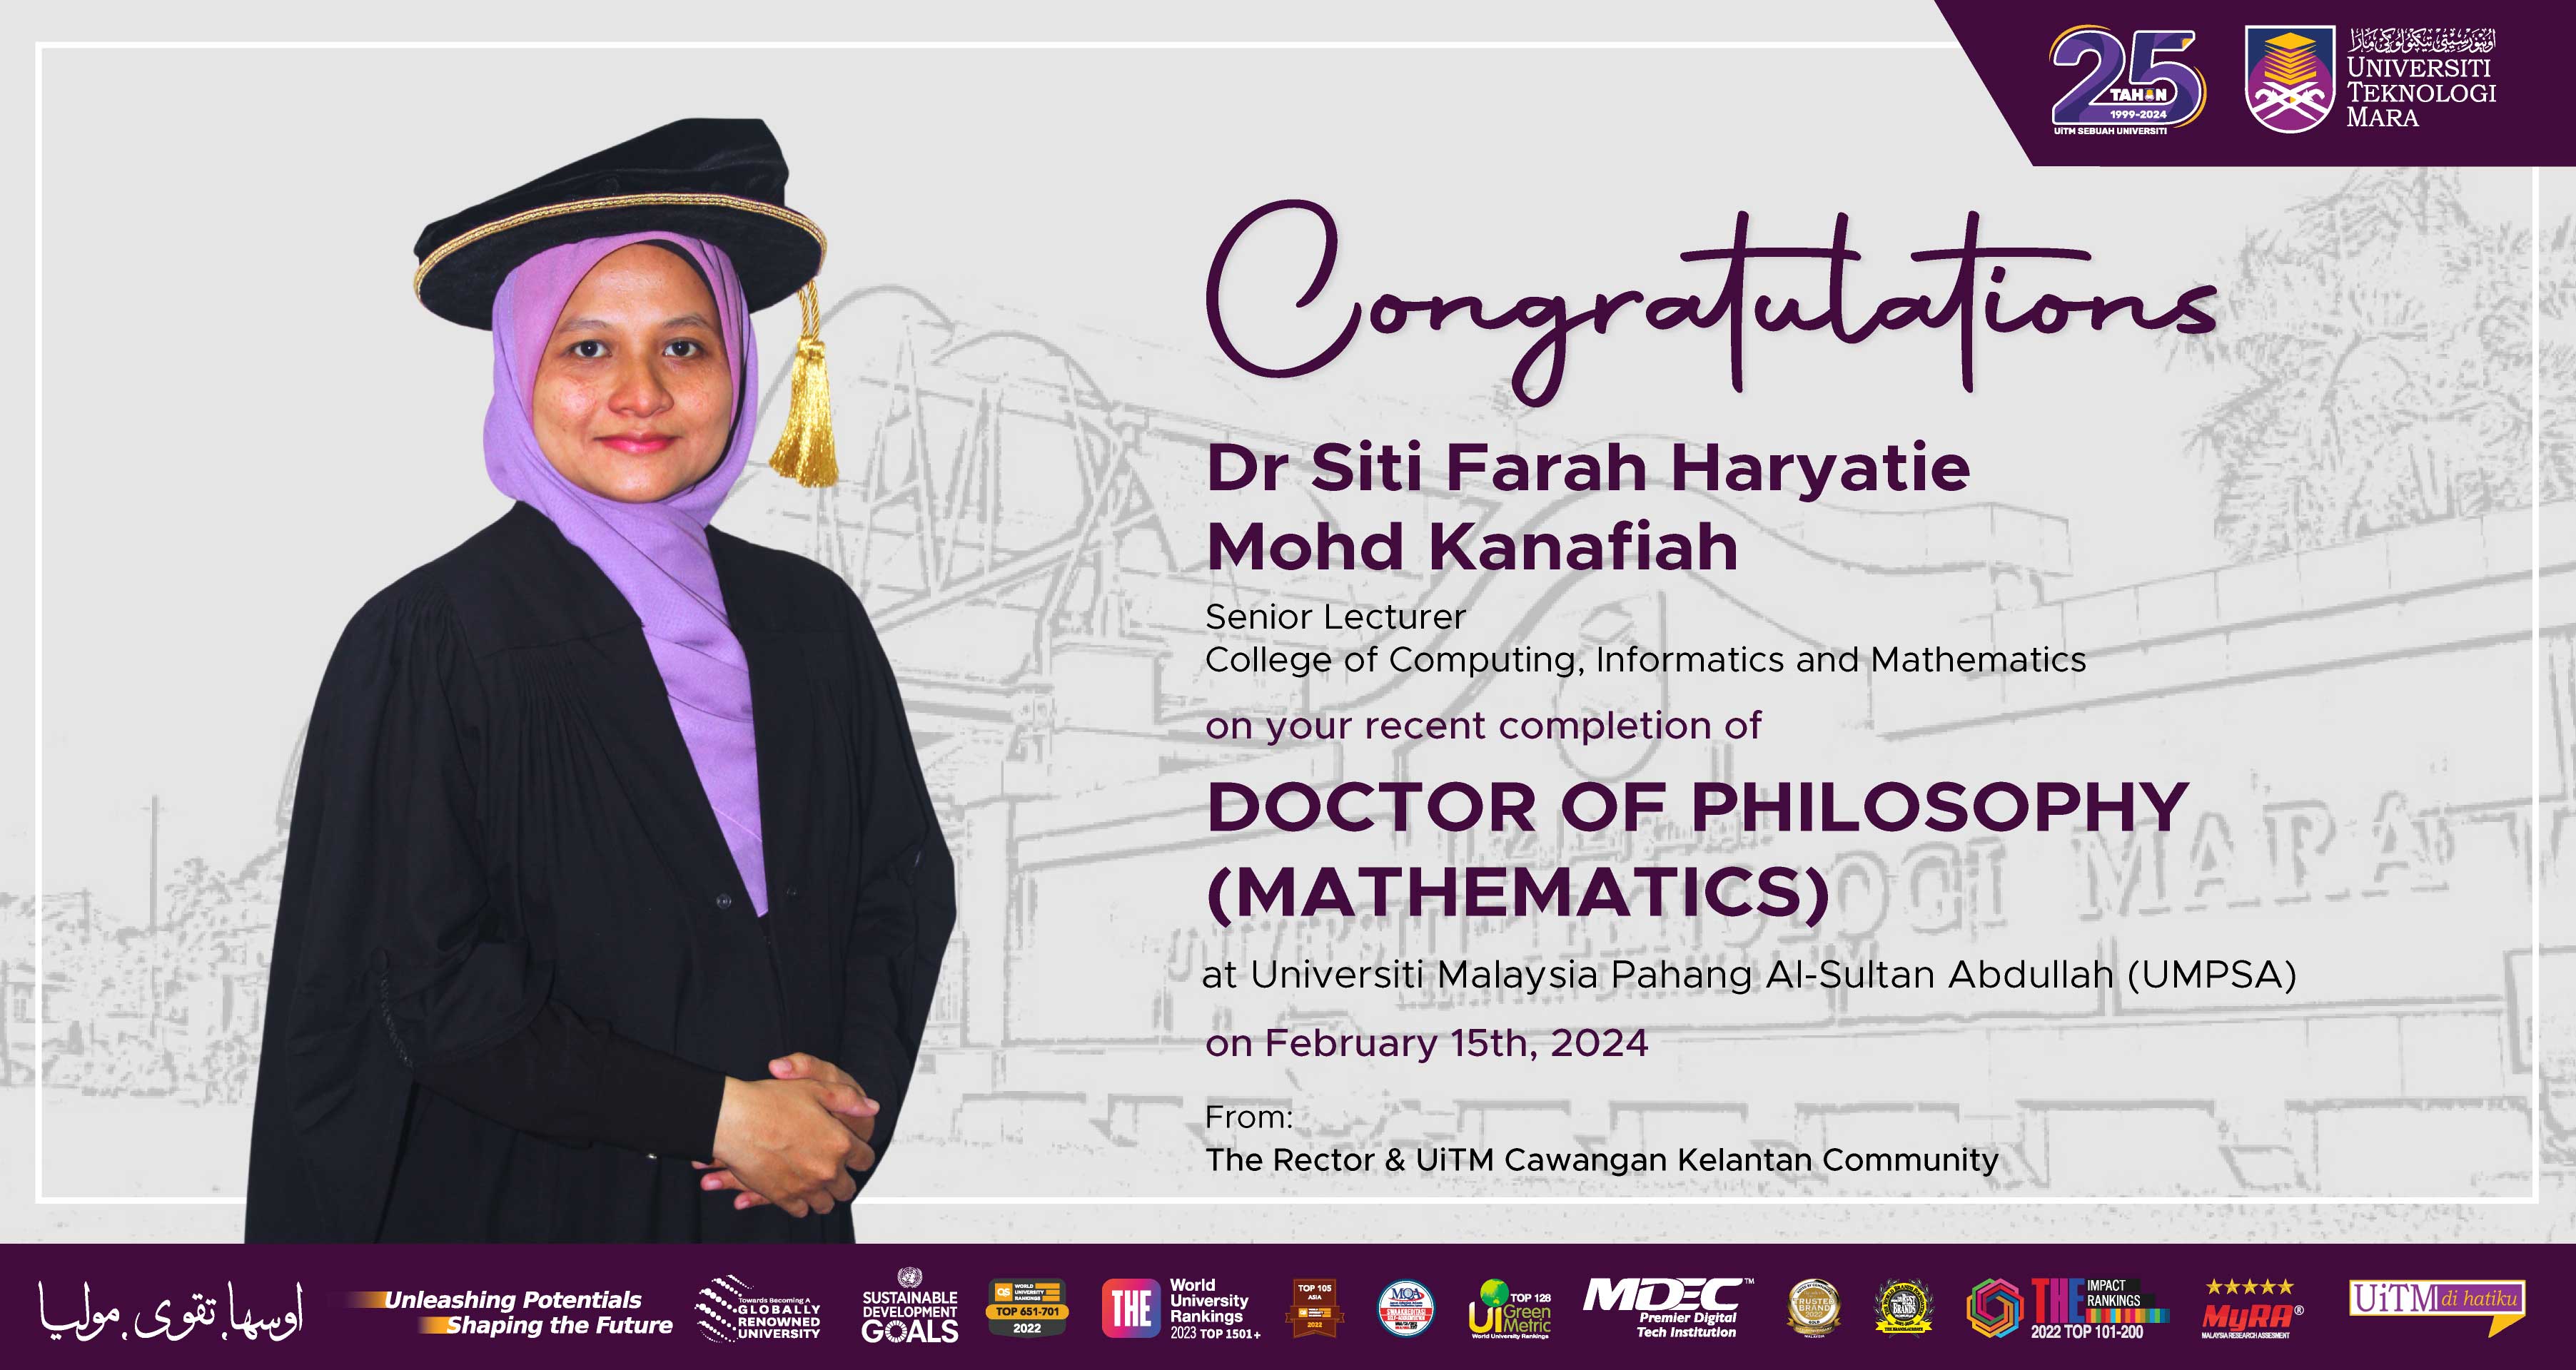 Congratulations!!! Dr Siti Farah Haryatie Mohd Kanafiah, Doctor of Philosophy (Mathematics)